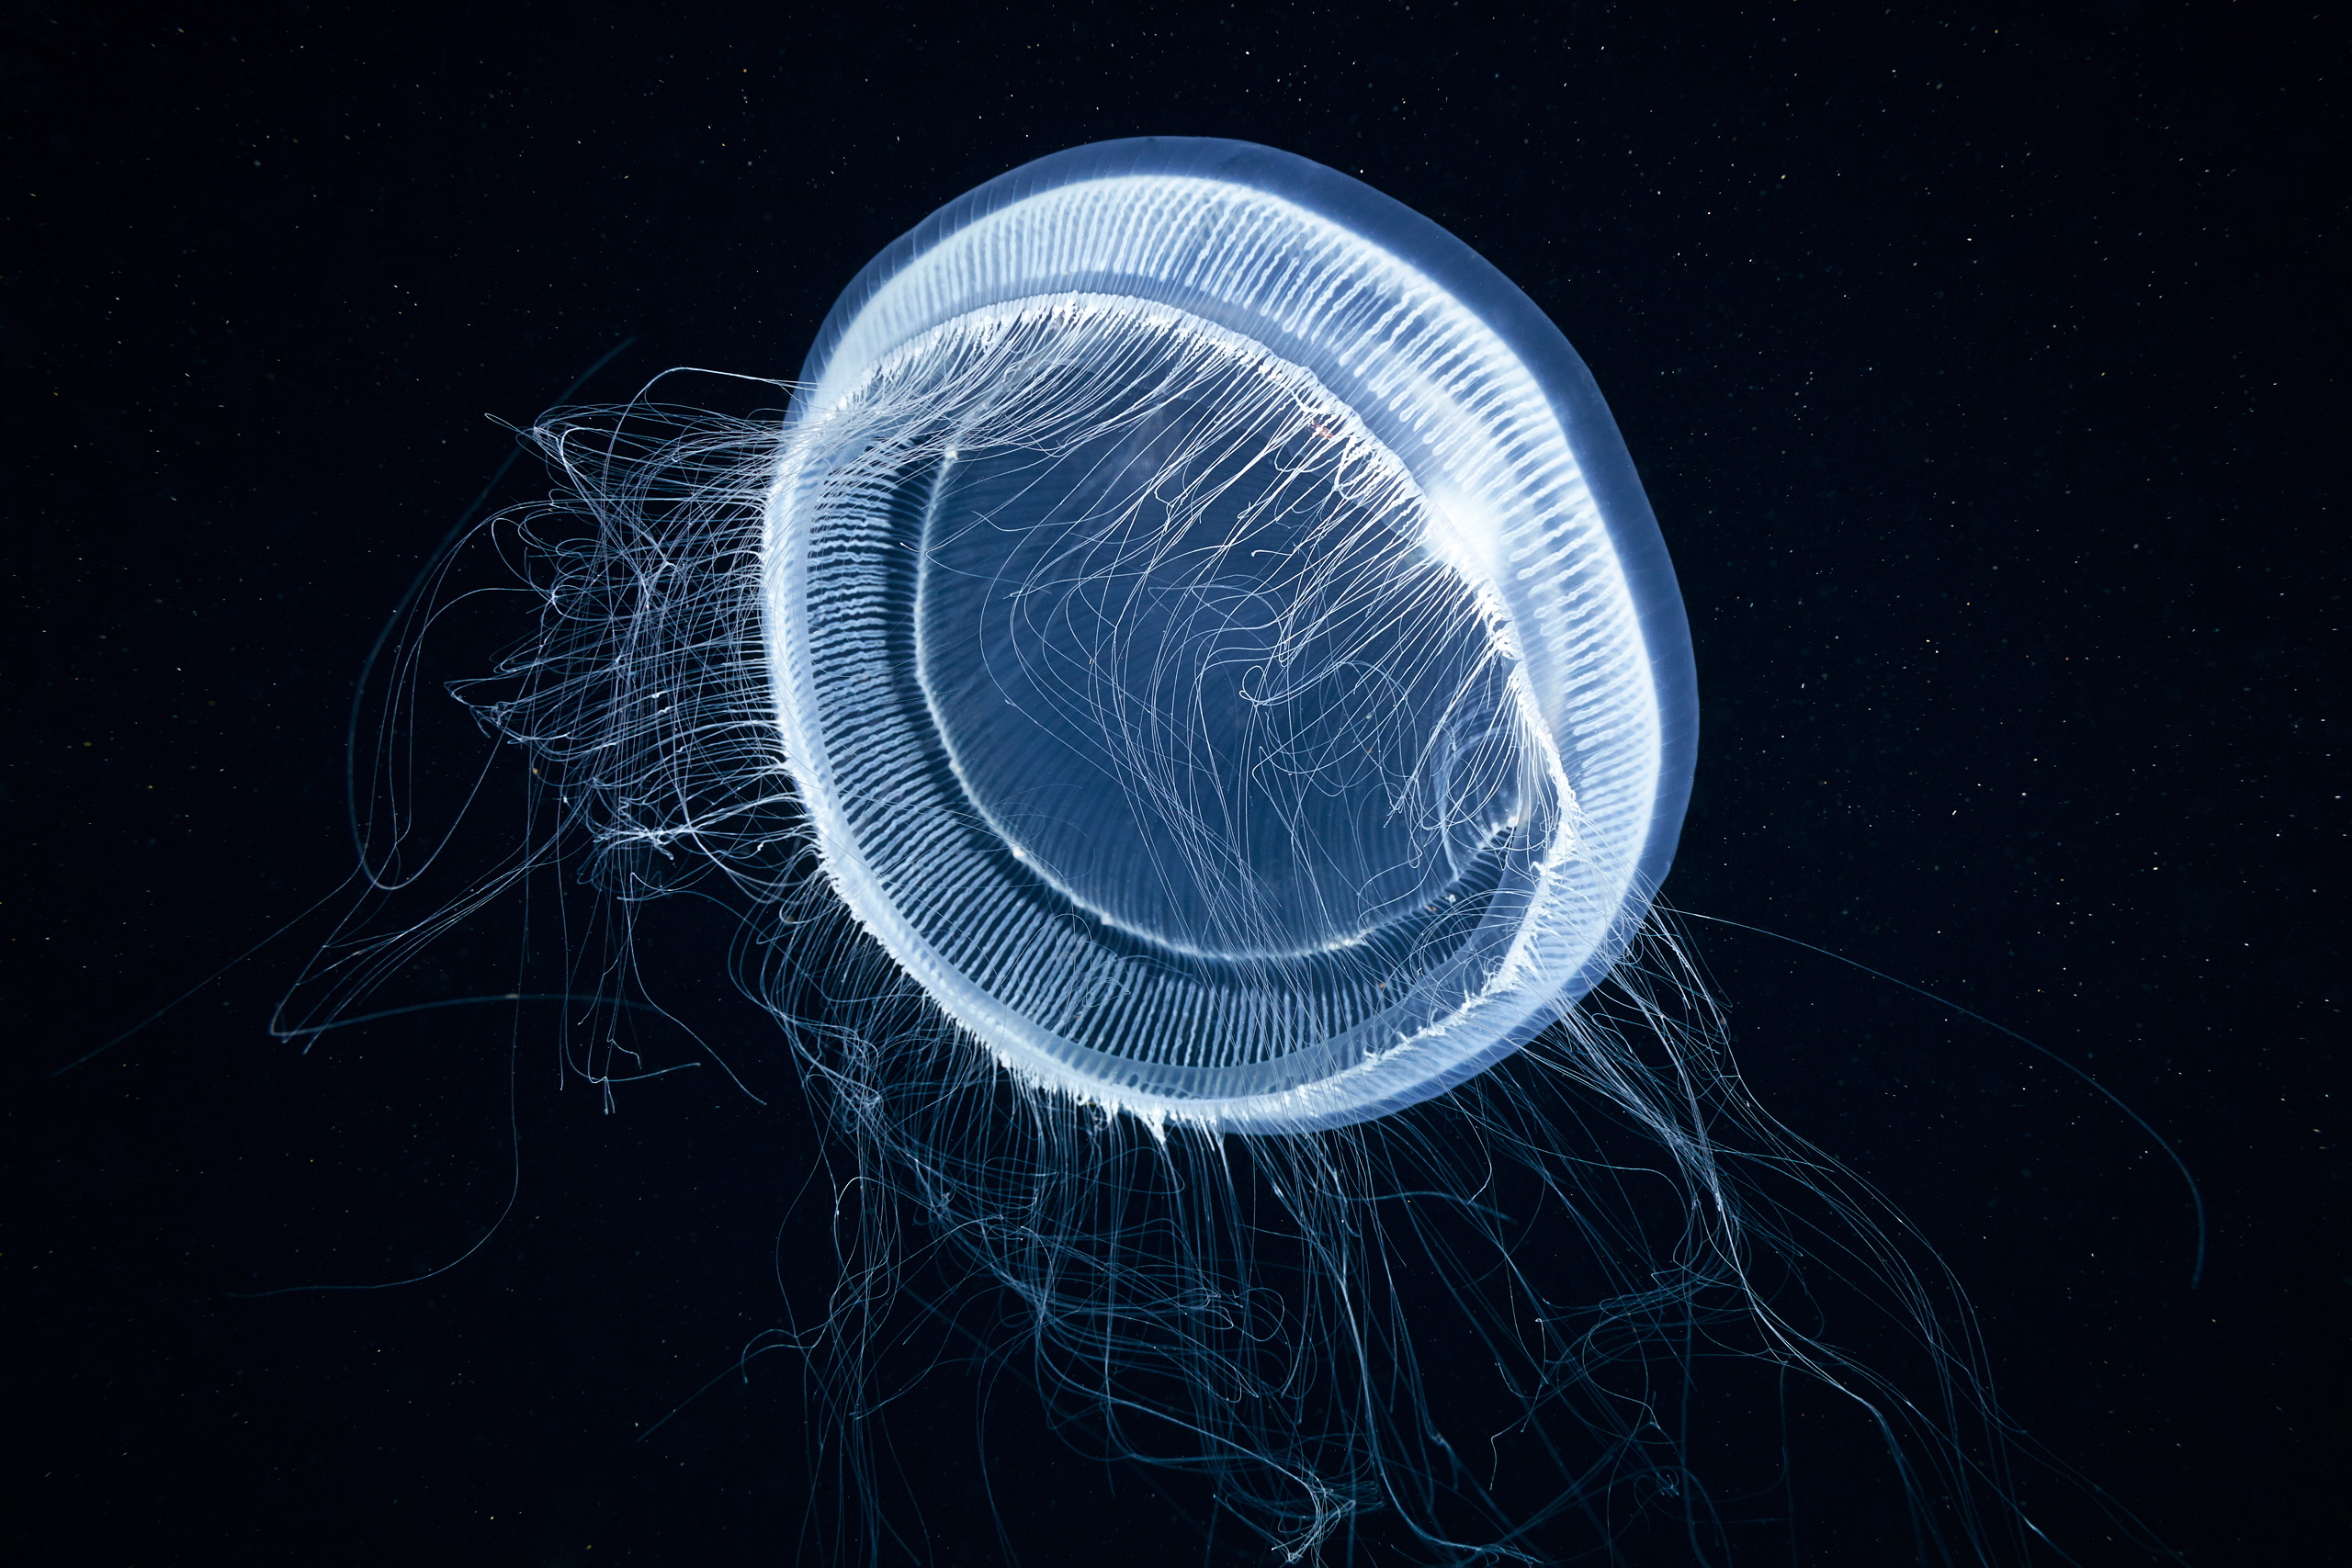 Hydrozoan jellyfish – Aequorea sp. – Crystal jellyfish 1